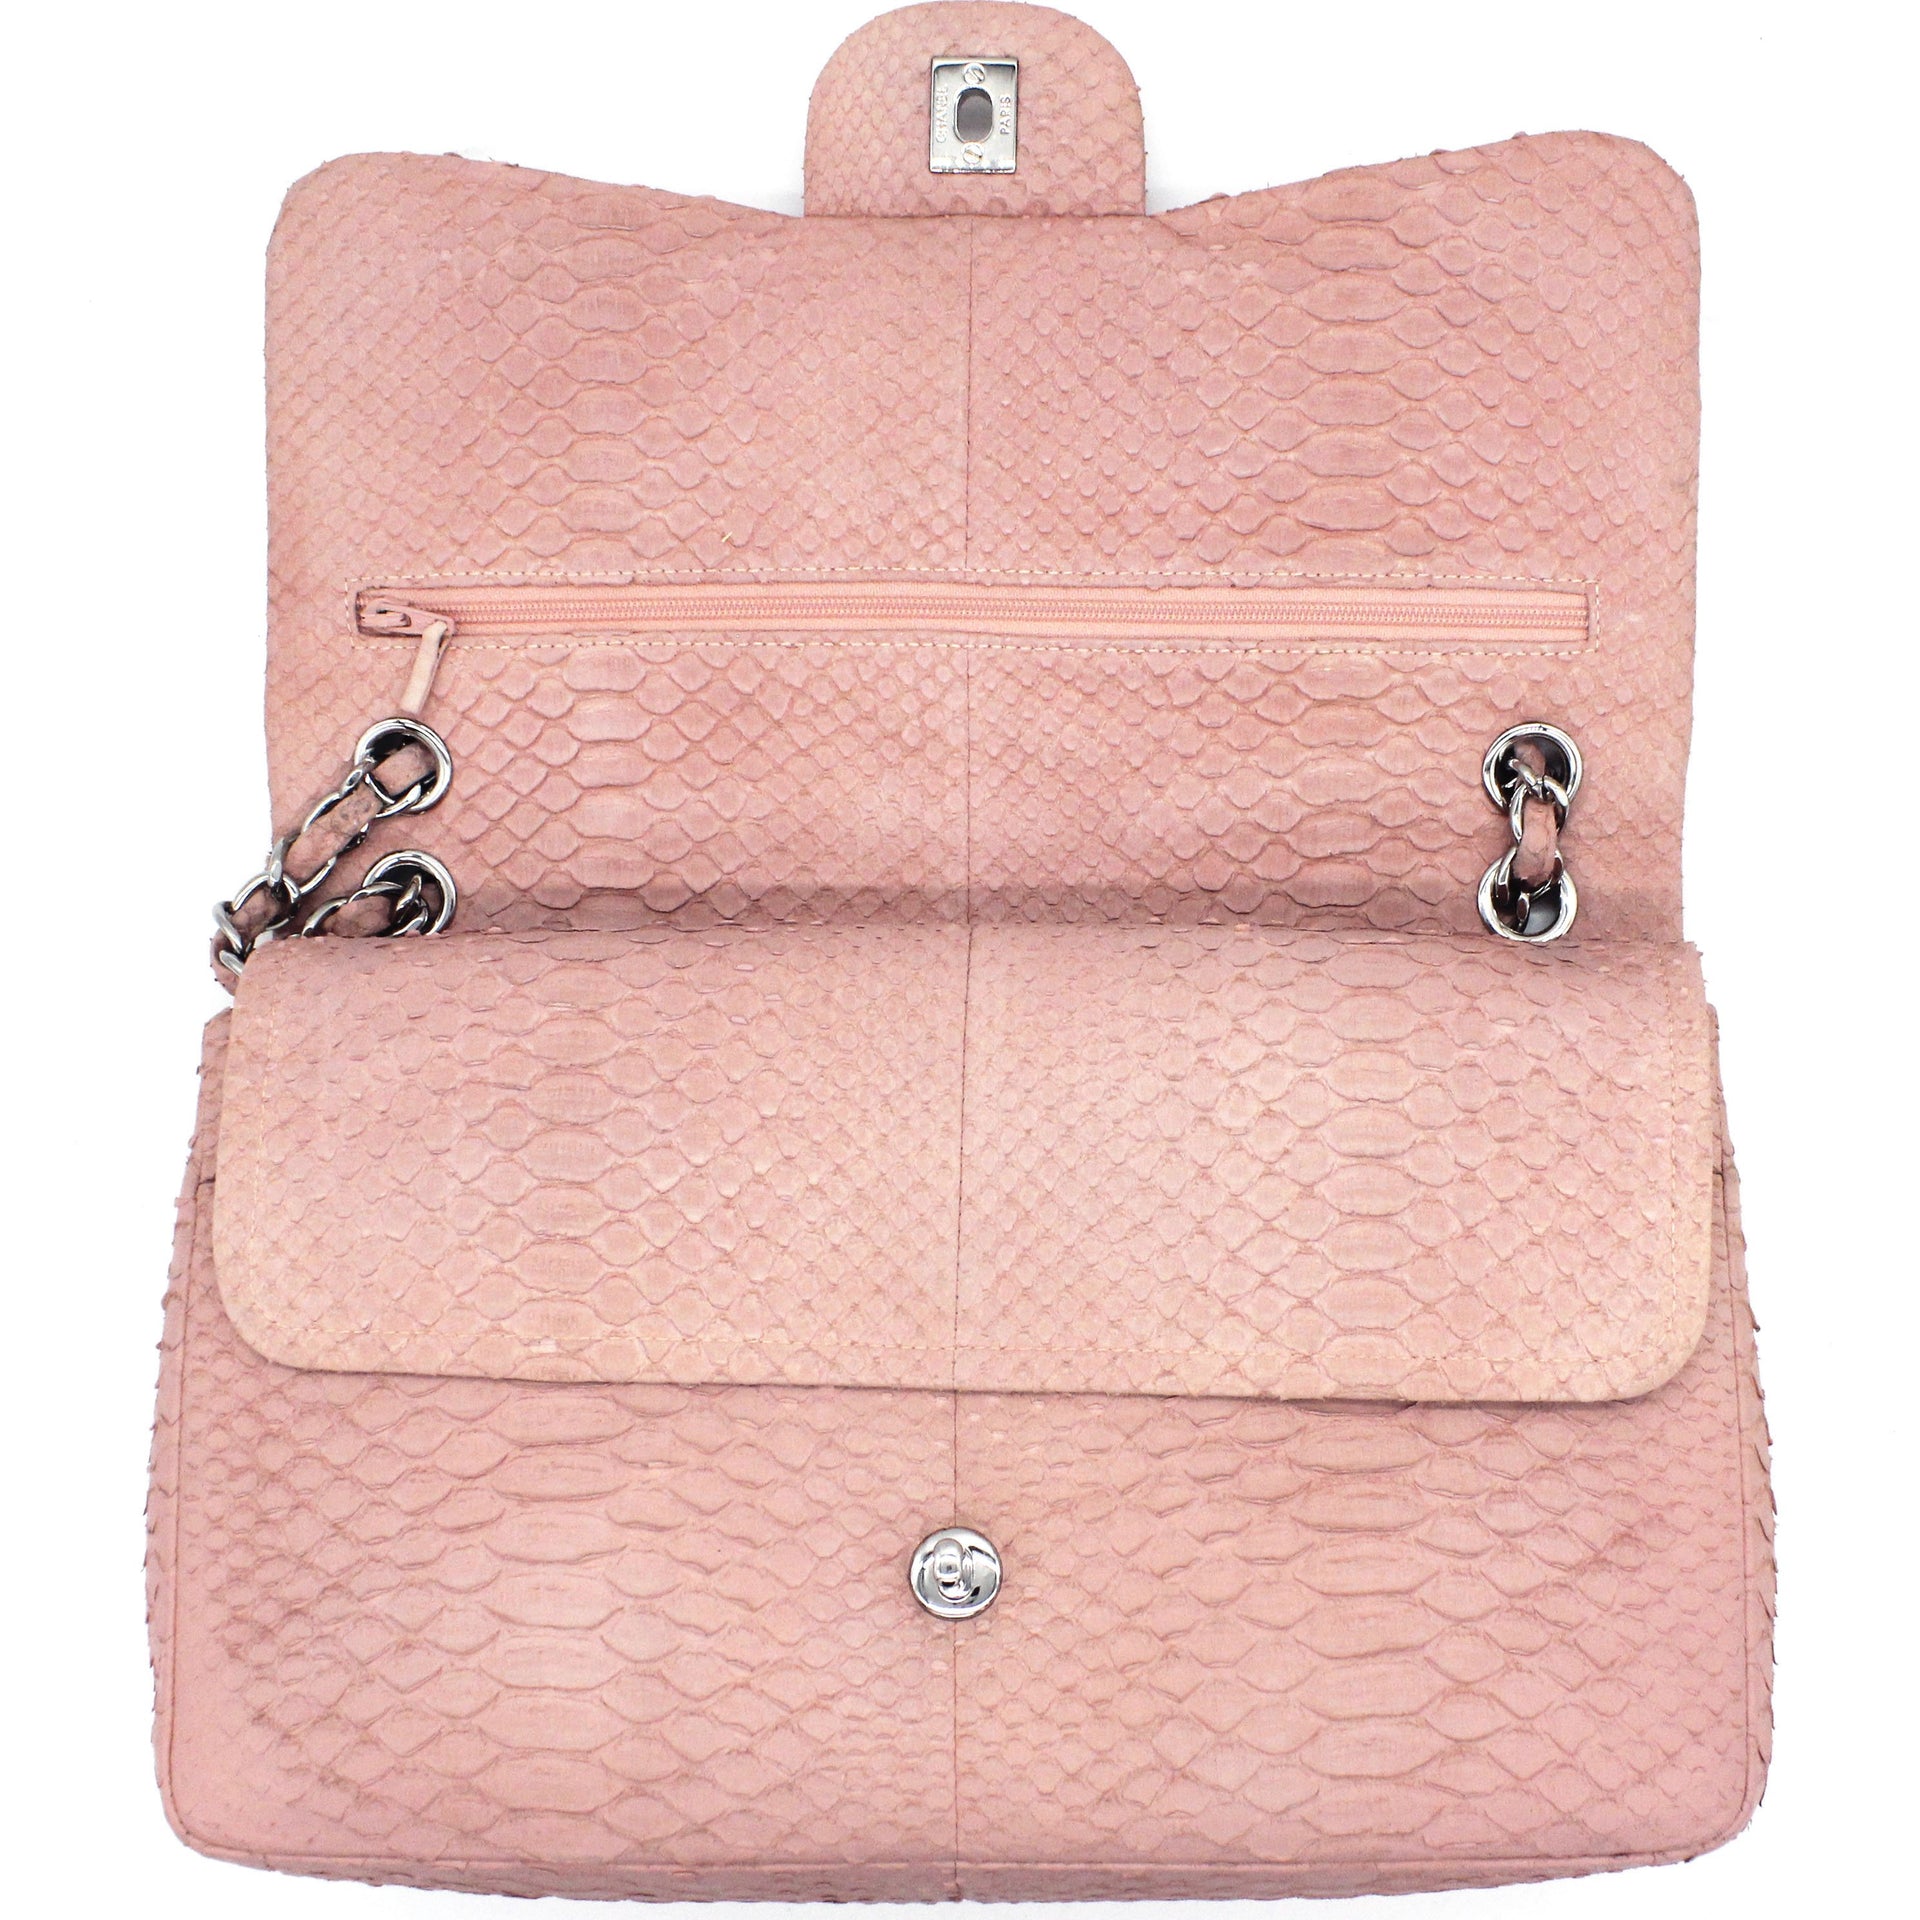 Classic Flap Jumbo Bag Pink Snakeskin